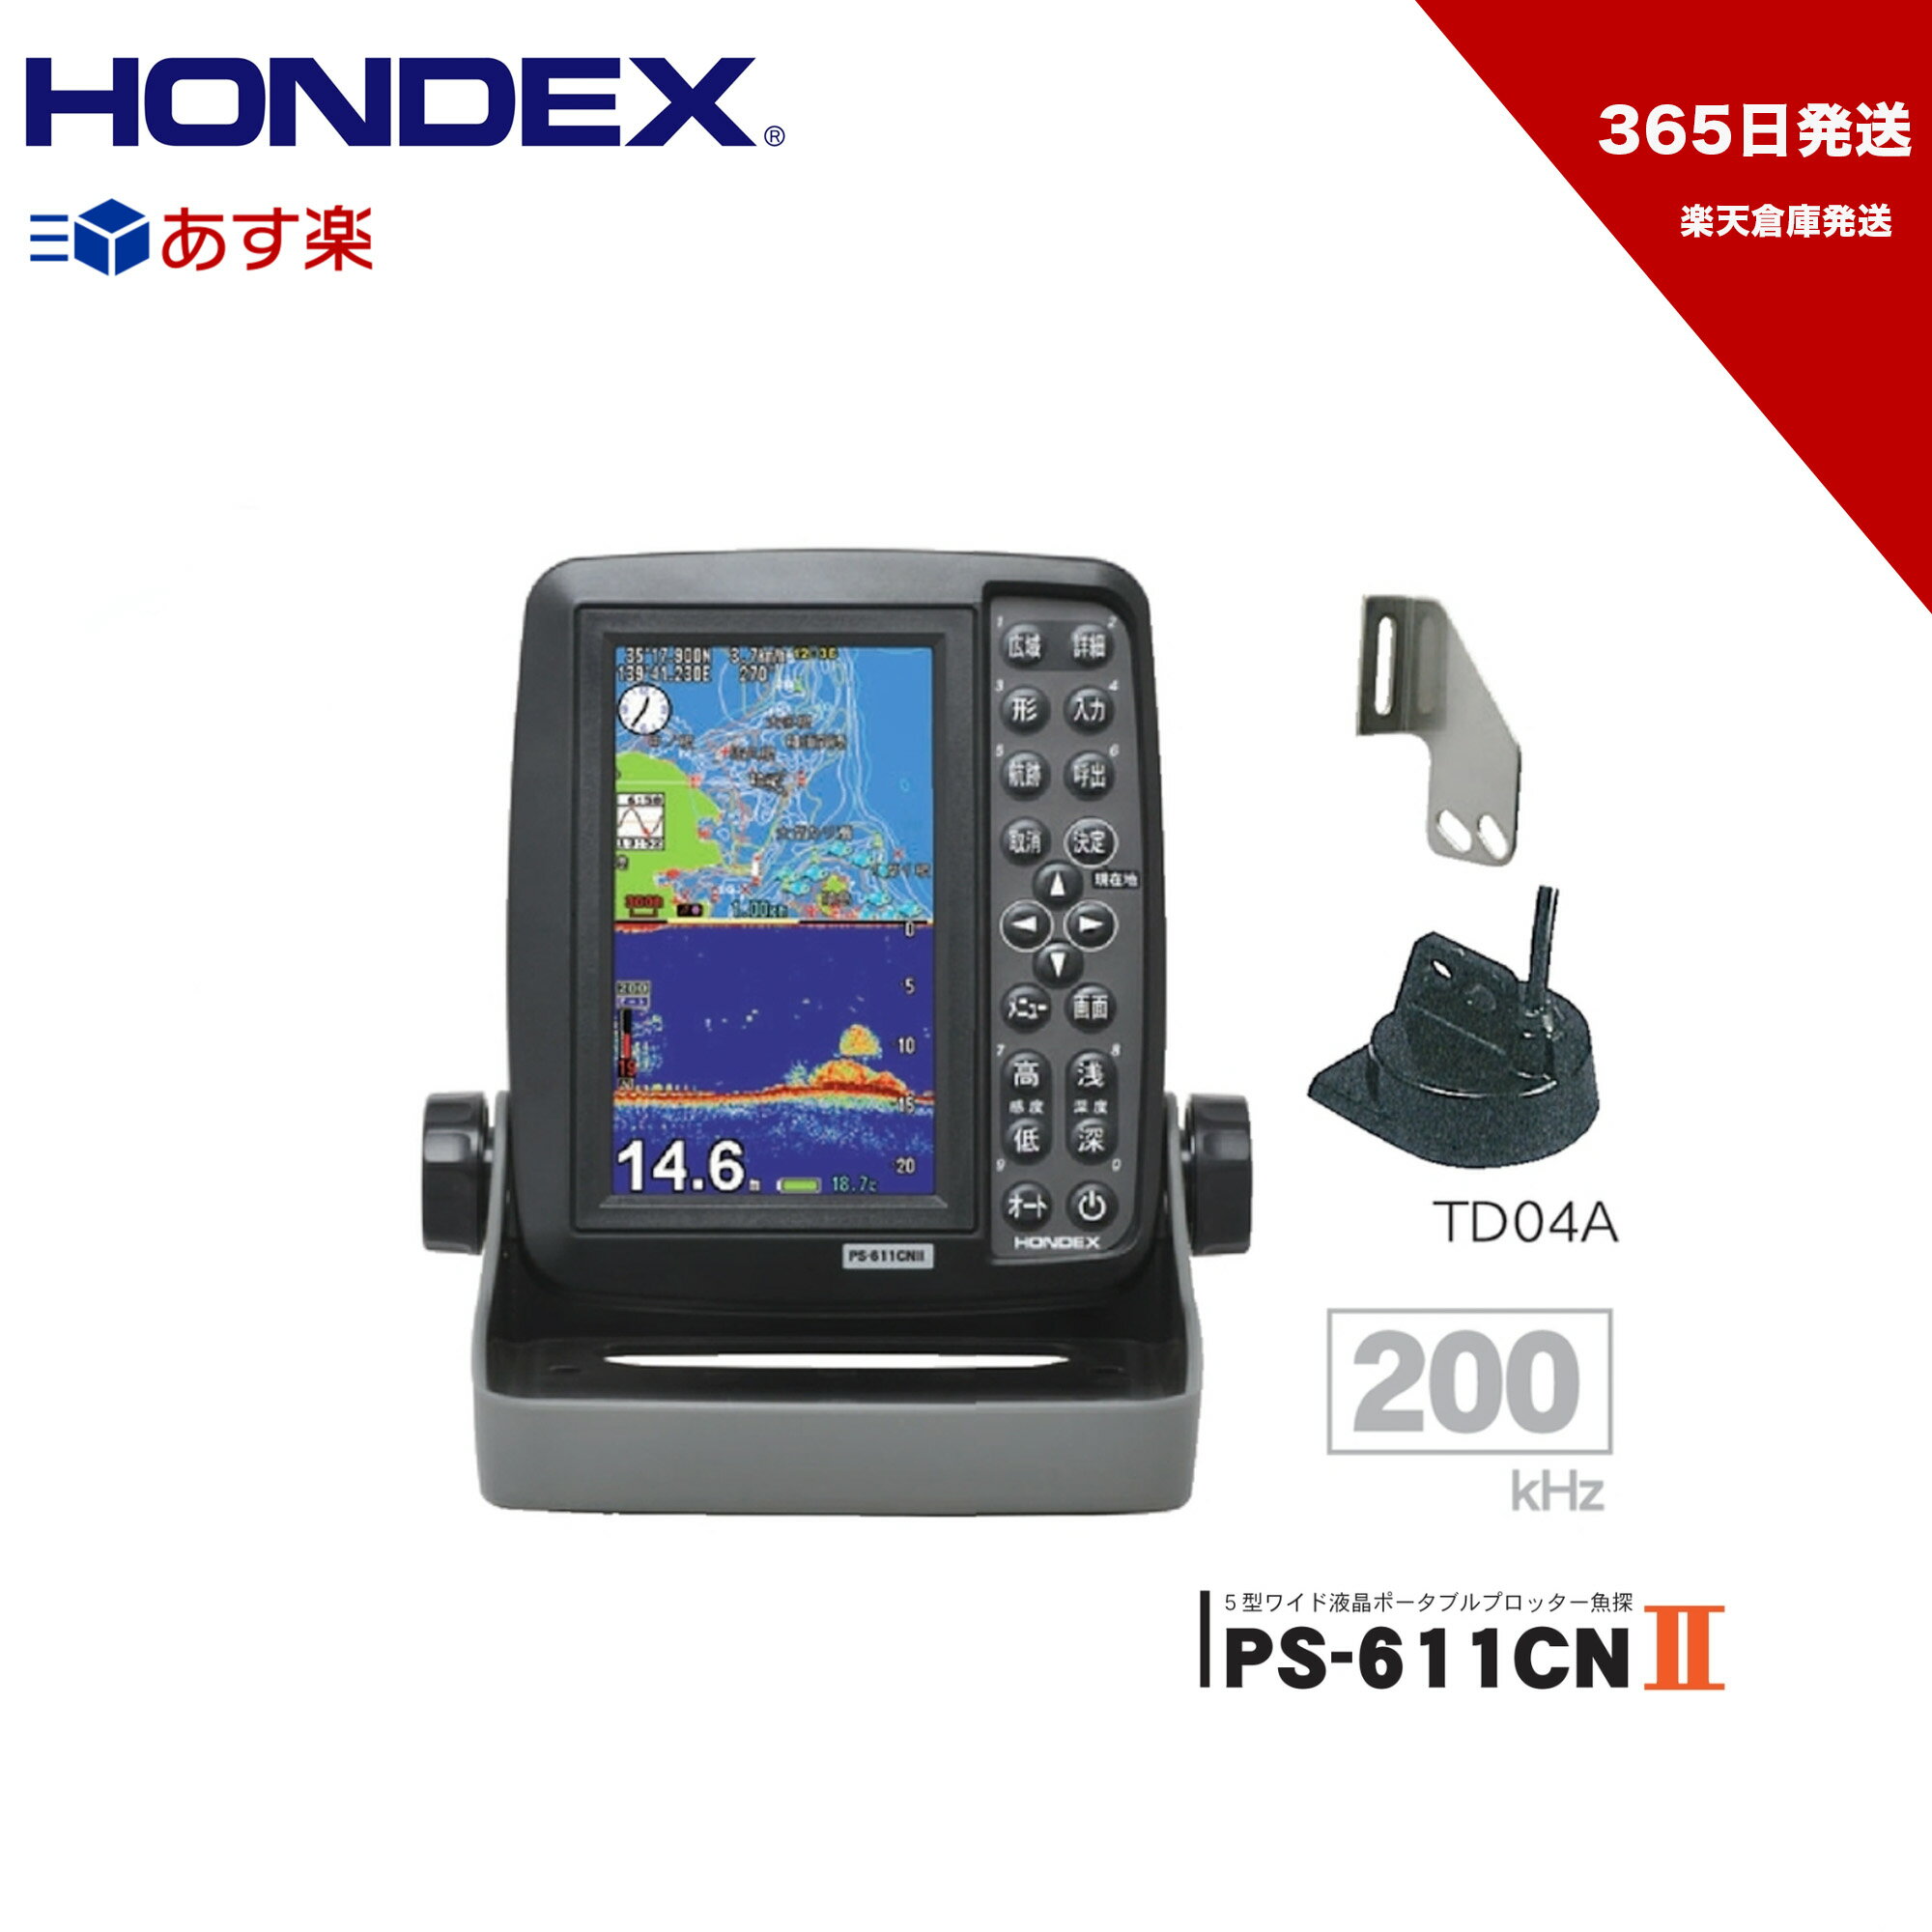 HONDEX PS-611CNII TD04A振動子 魚群探知機 5型ワイド液晶 魚探 GPS内蔵 ホンデックス 本多電子 機械屋 あす楽【送料無料・365日発送】